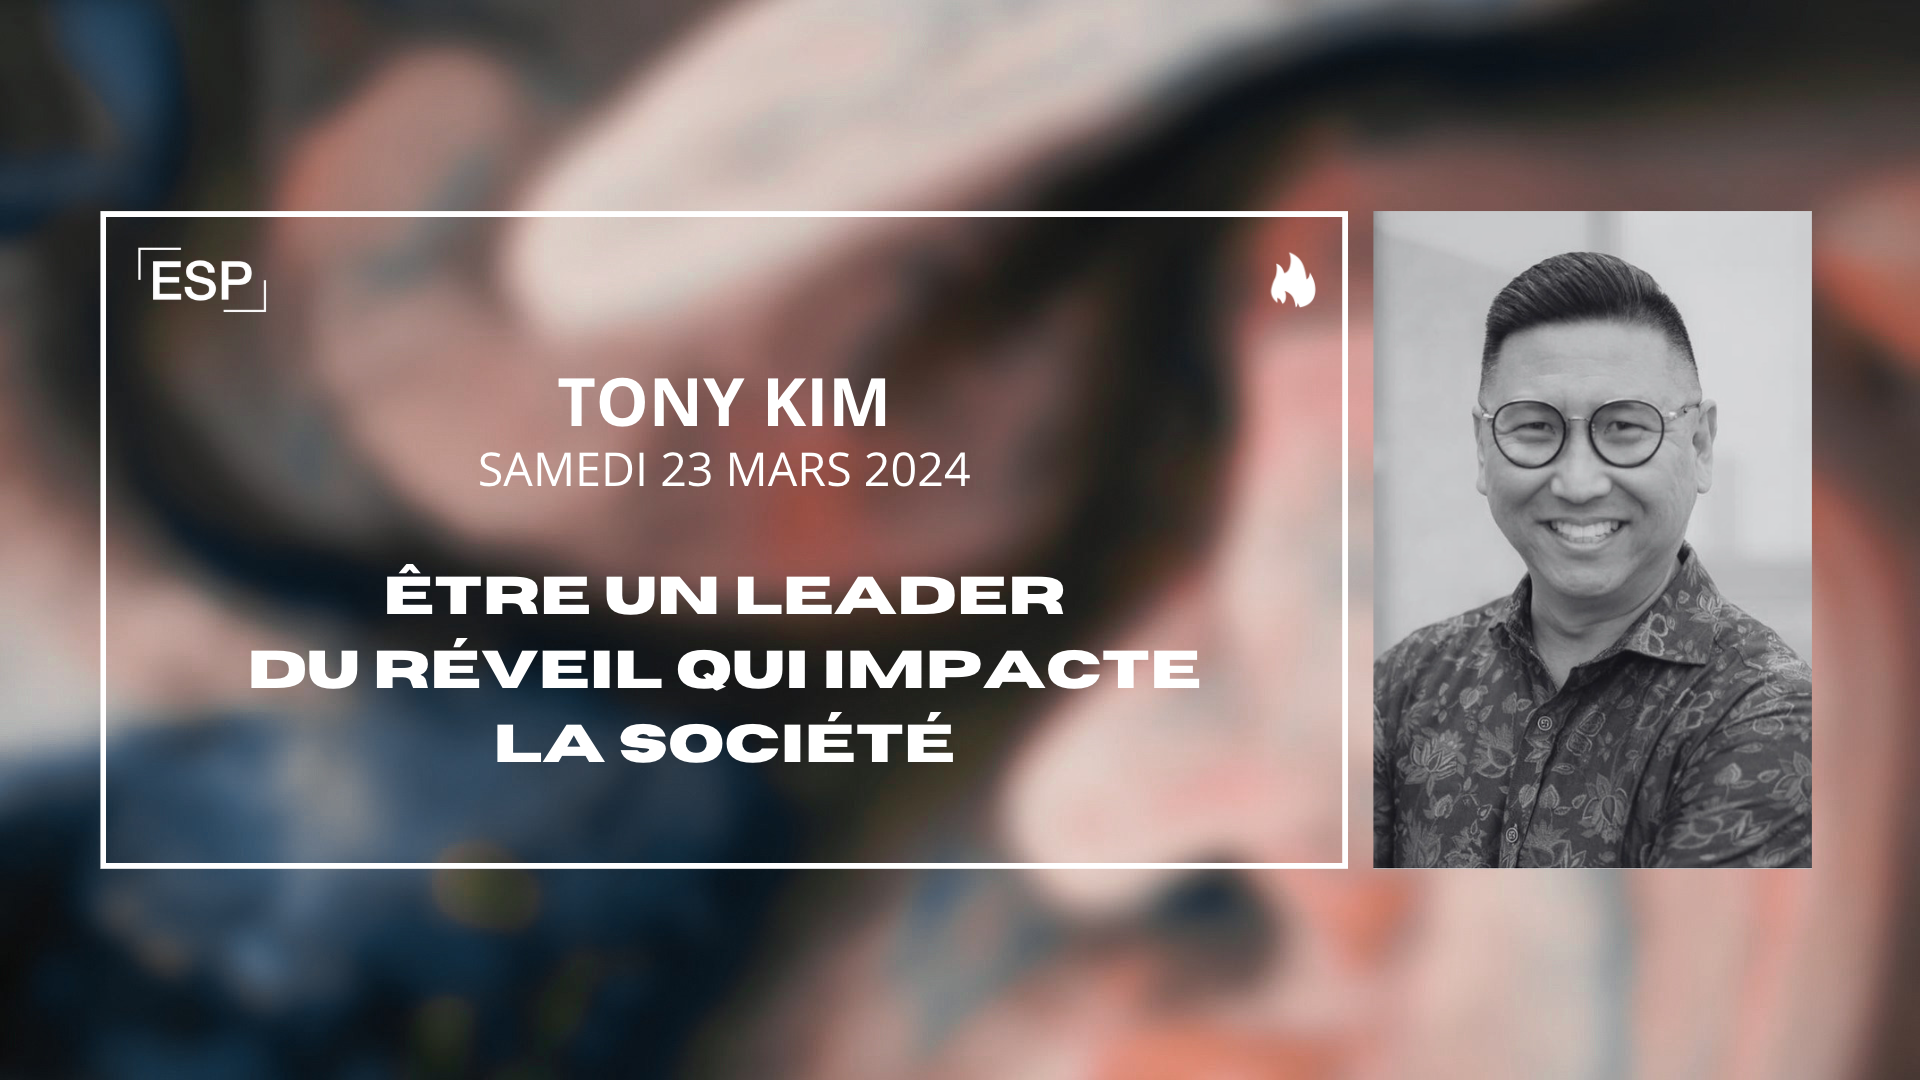 Training | Becoming an Awakening Leader who impacts society (with Tony Kim)